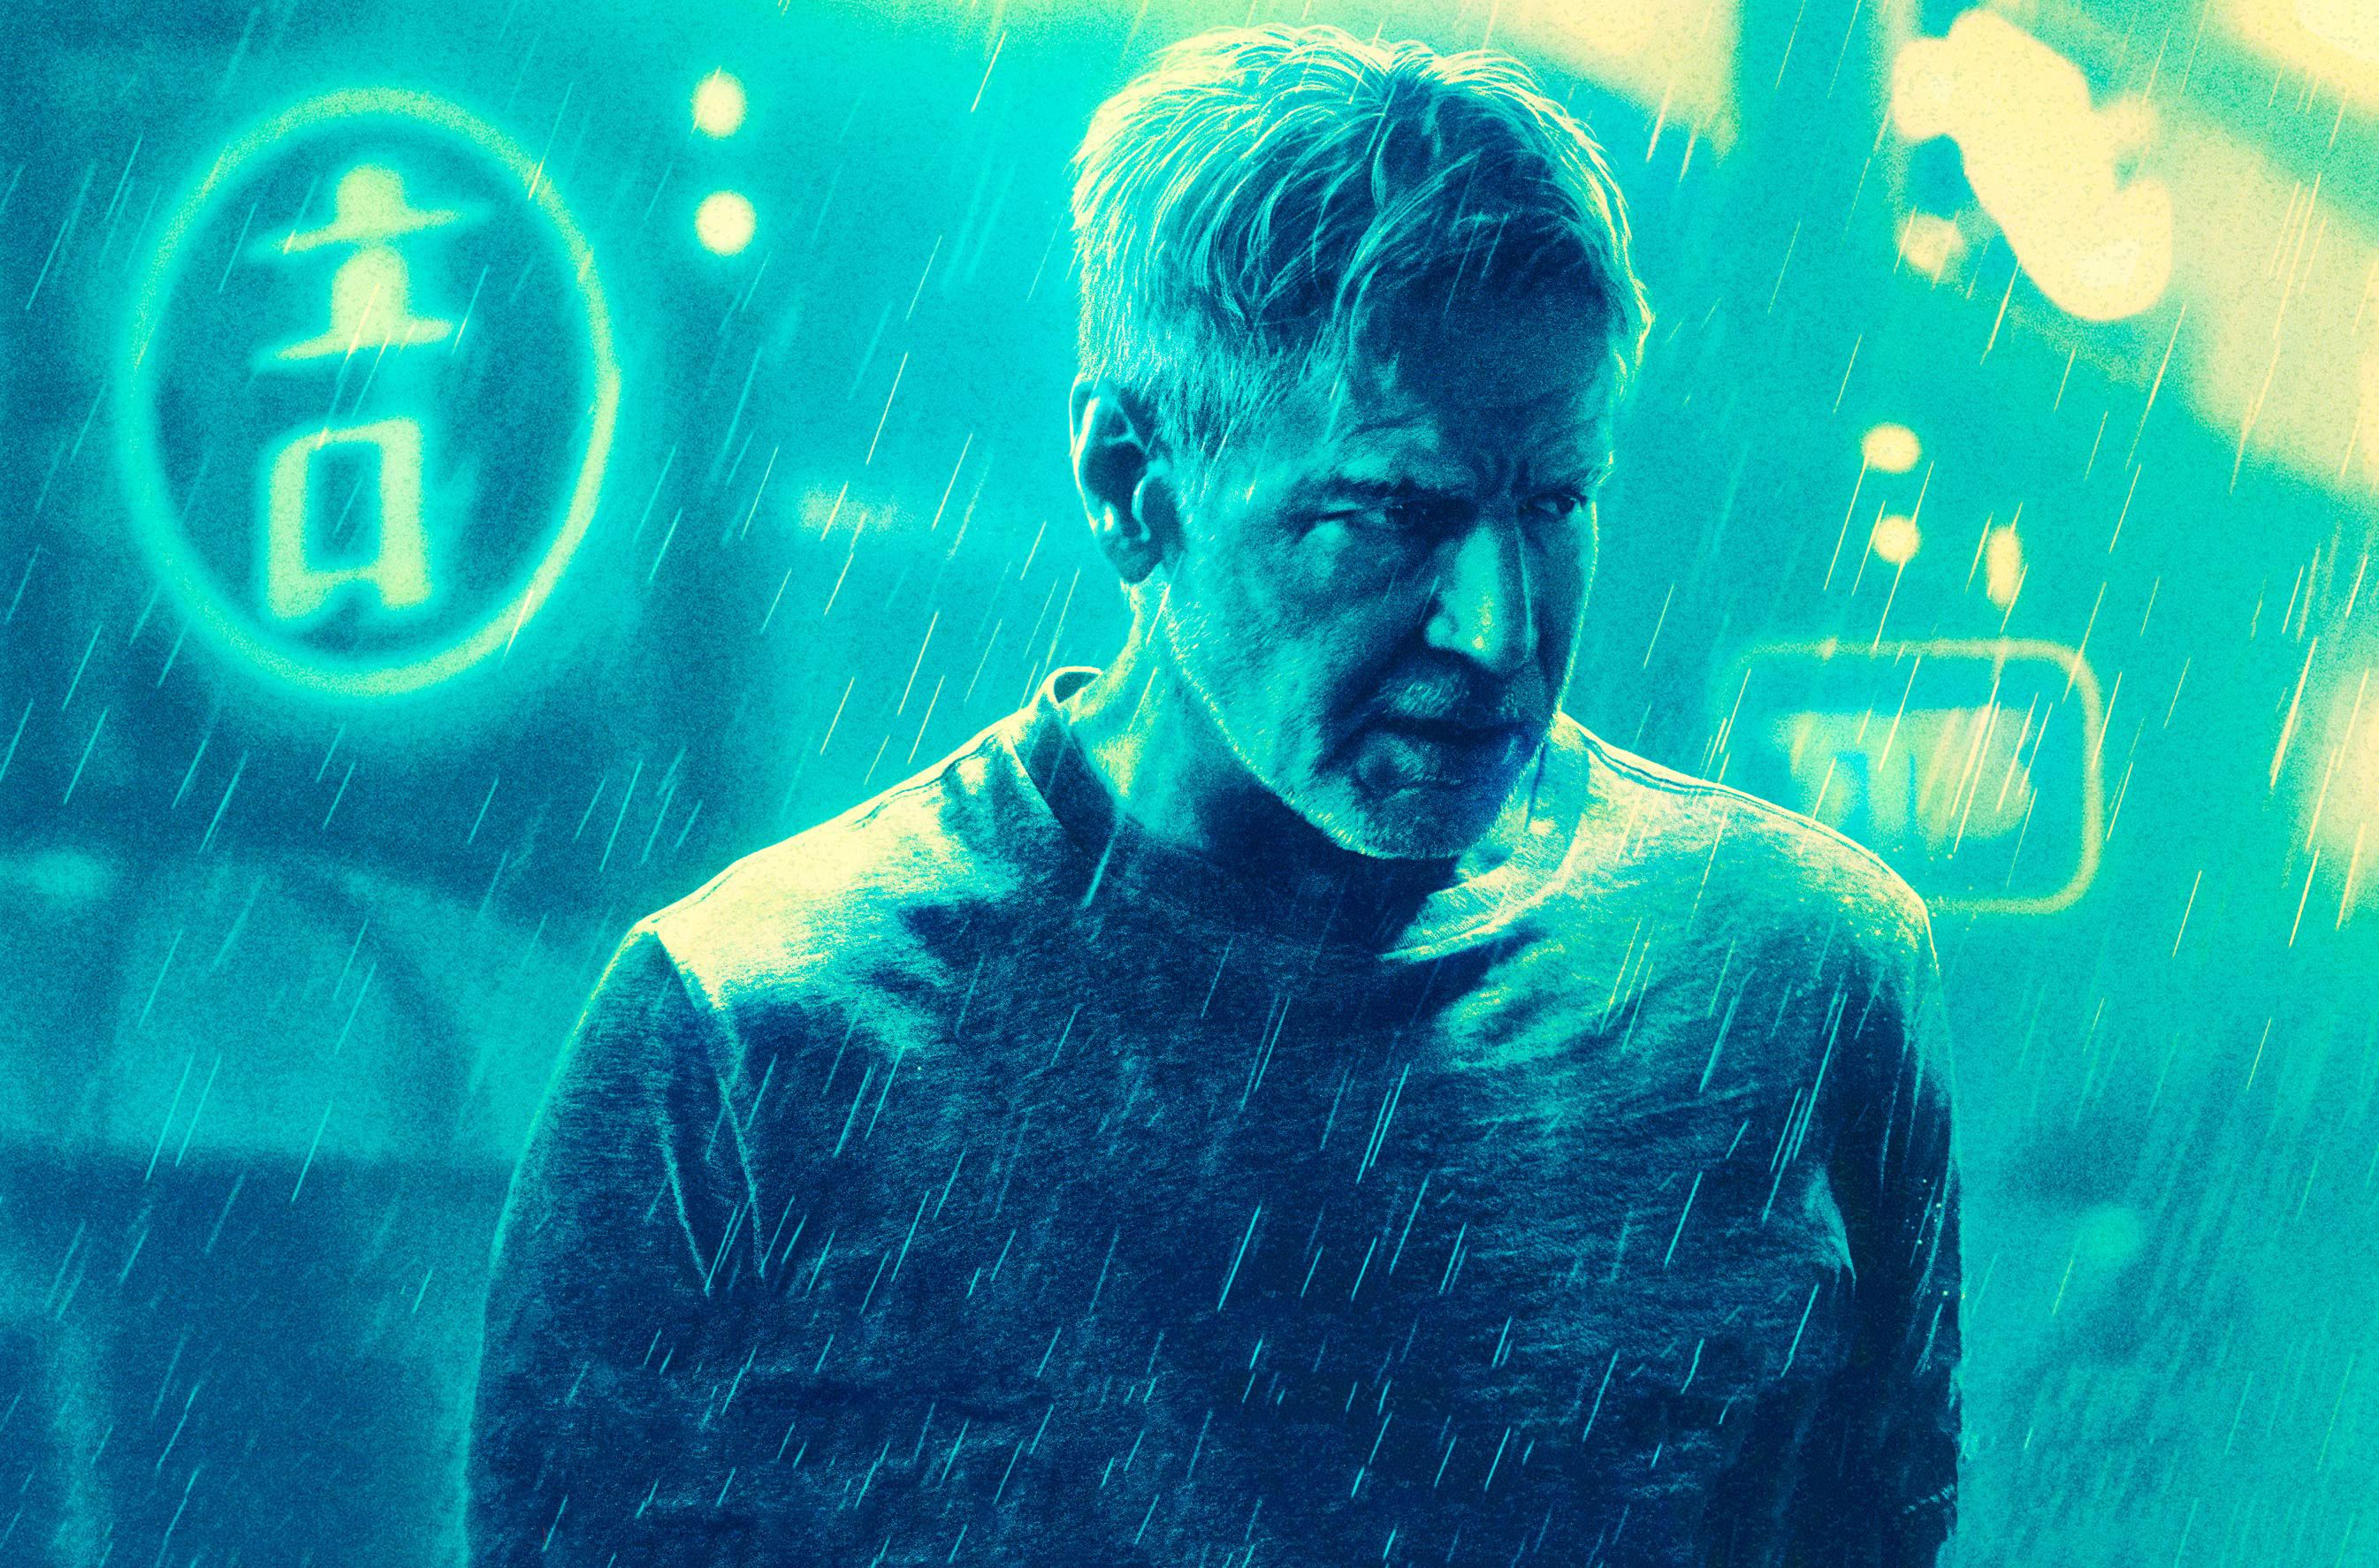 Wallpapers : blade runner 2049, Harrison Ford, movies, Blade Runner, men, rain, neon 2691x1774